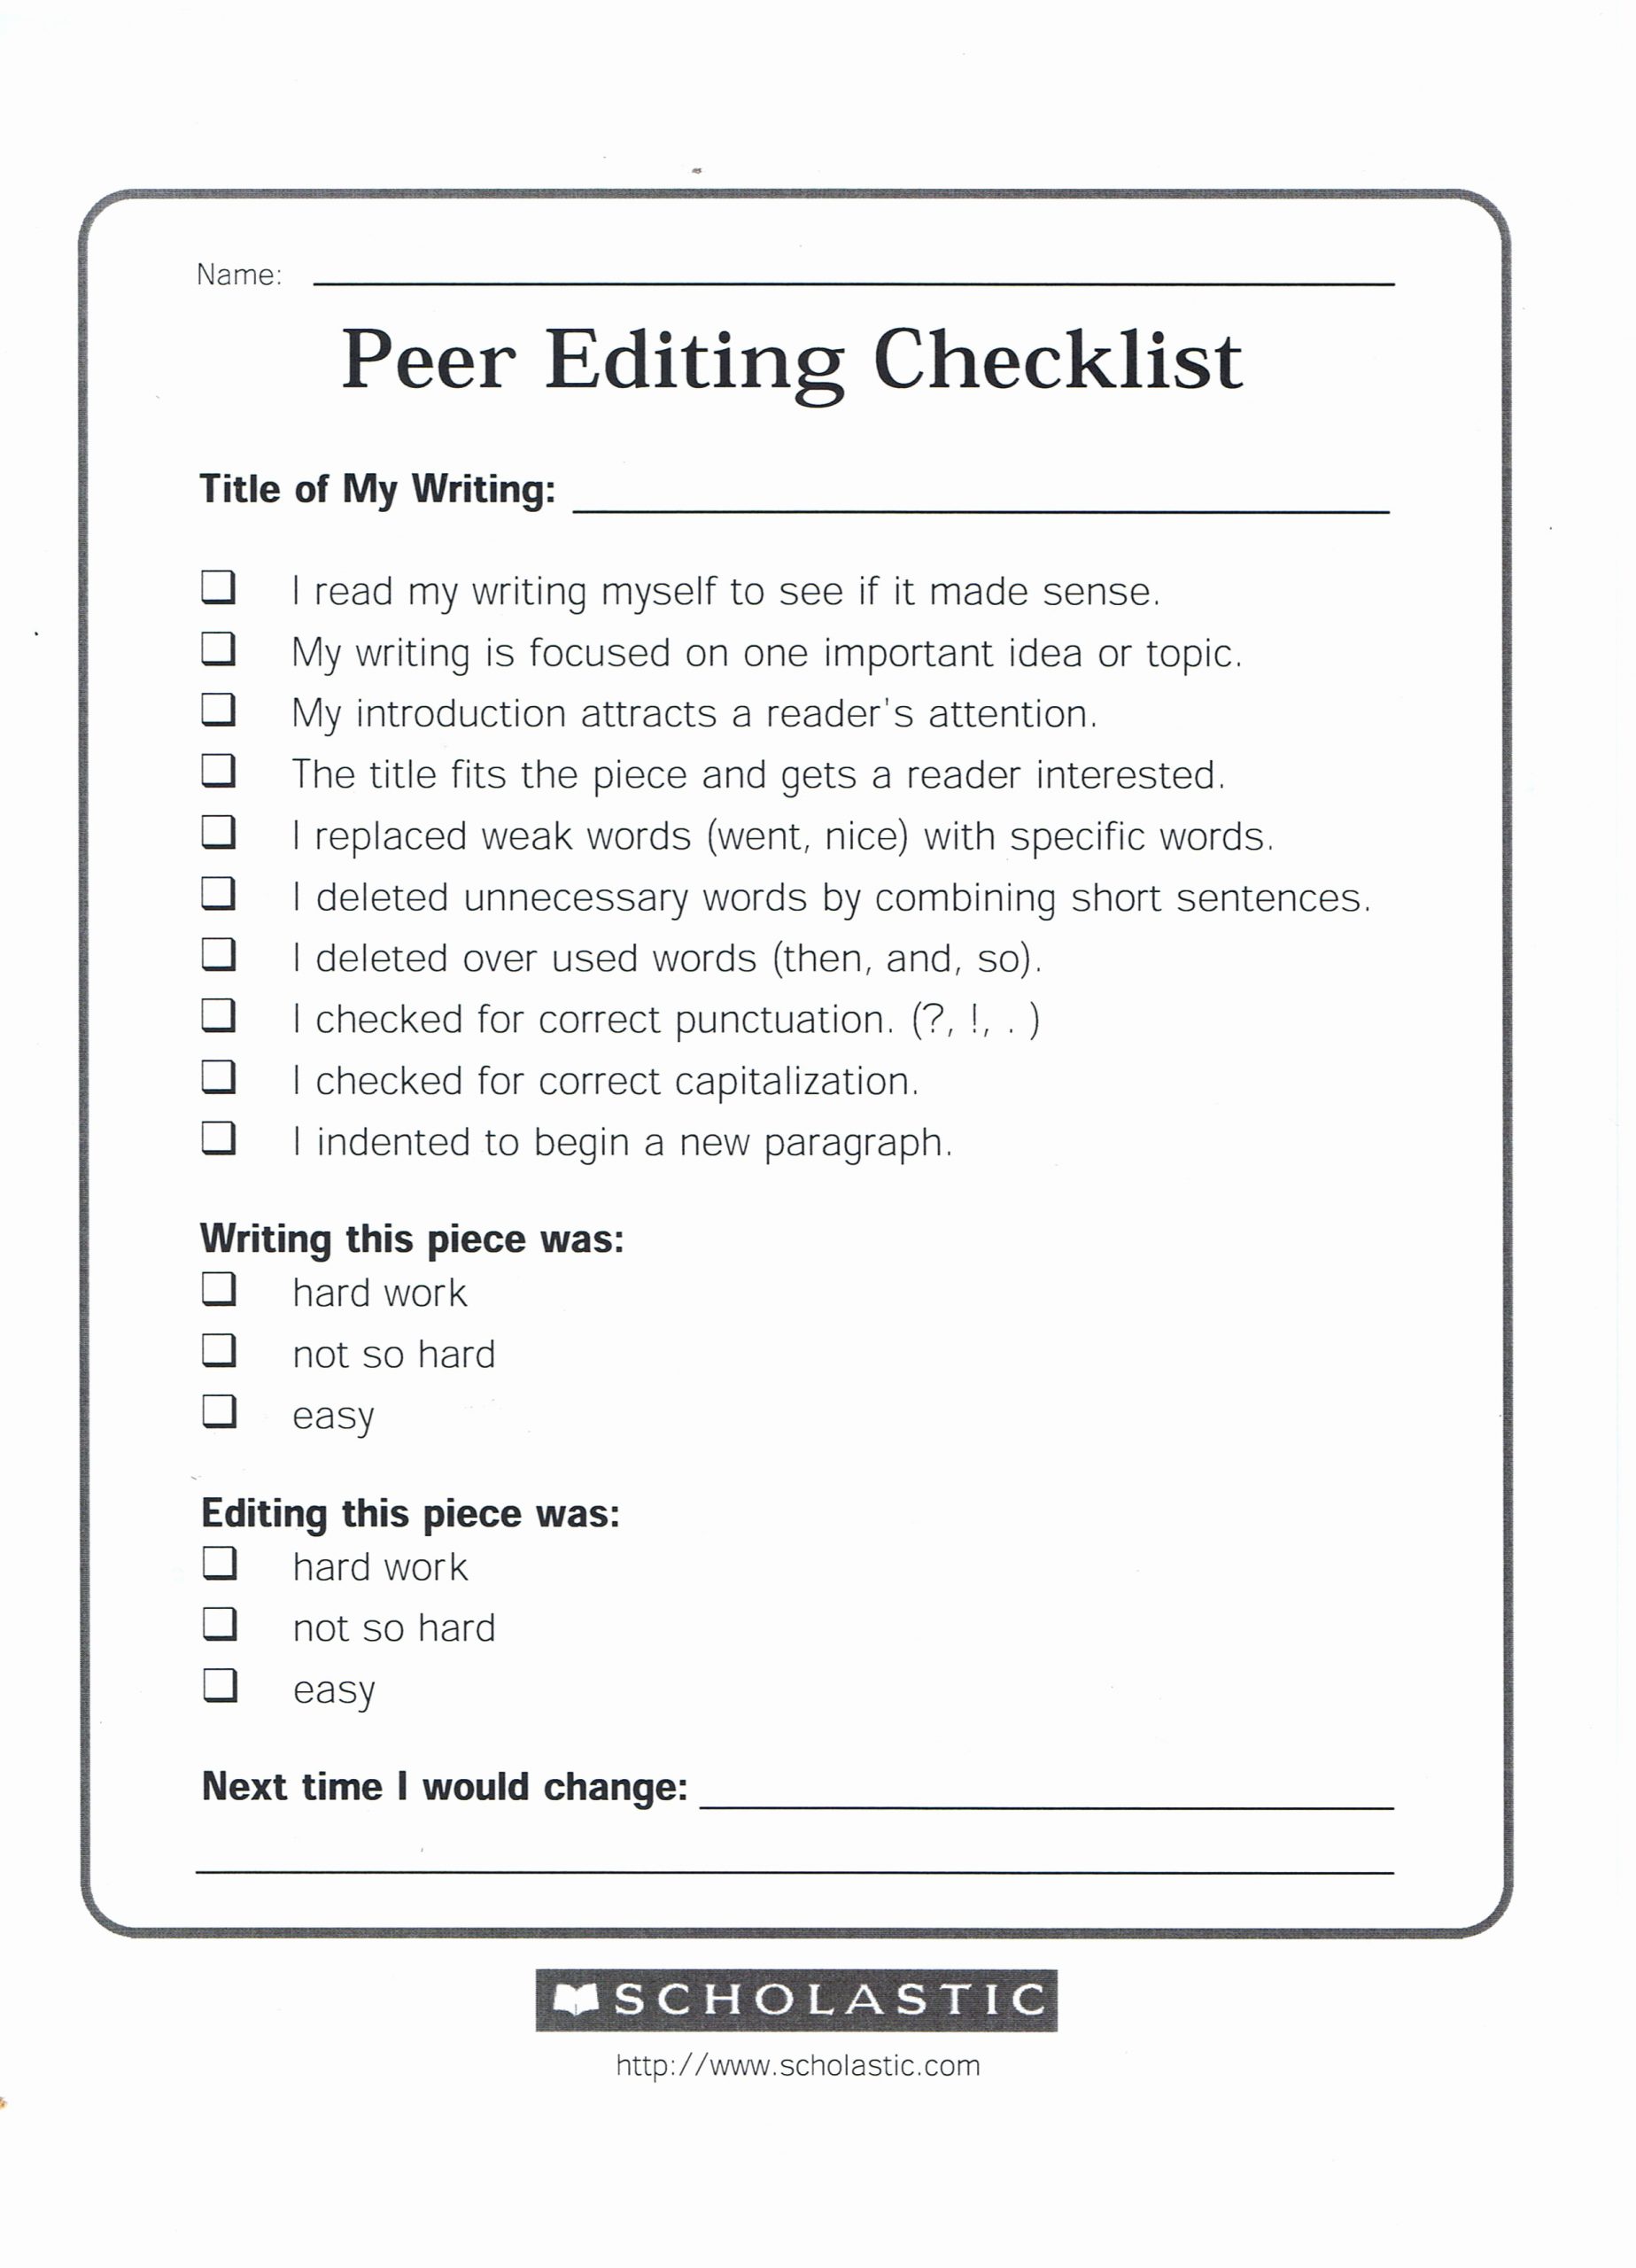 High School Essay Writing Worksheets Inspirational Peer Editing Checklist 2 480×3 437 Pixels